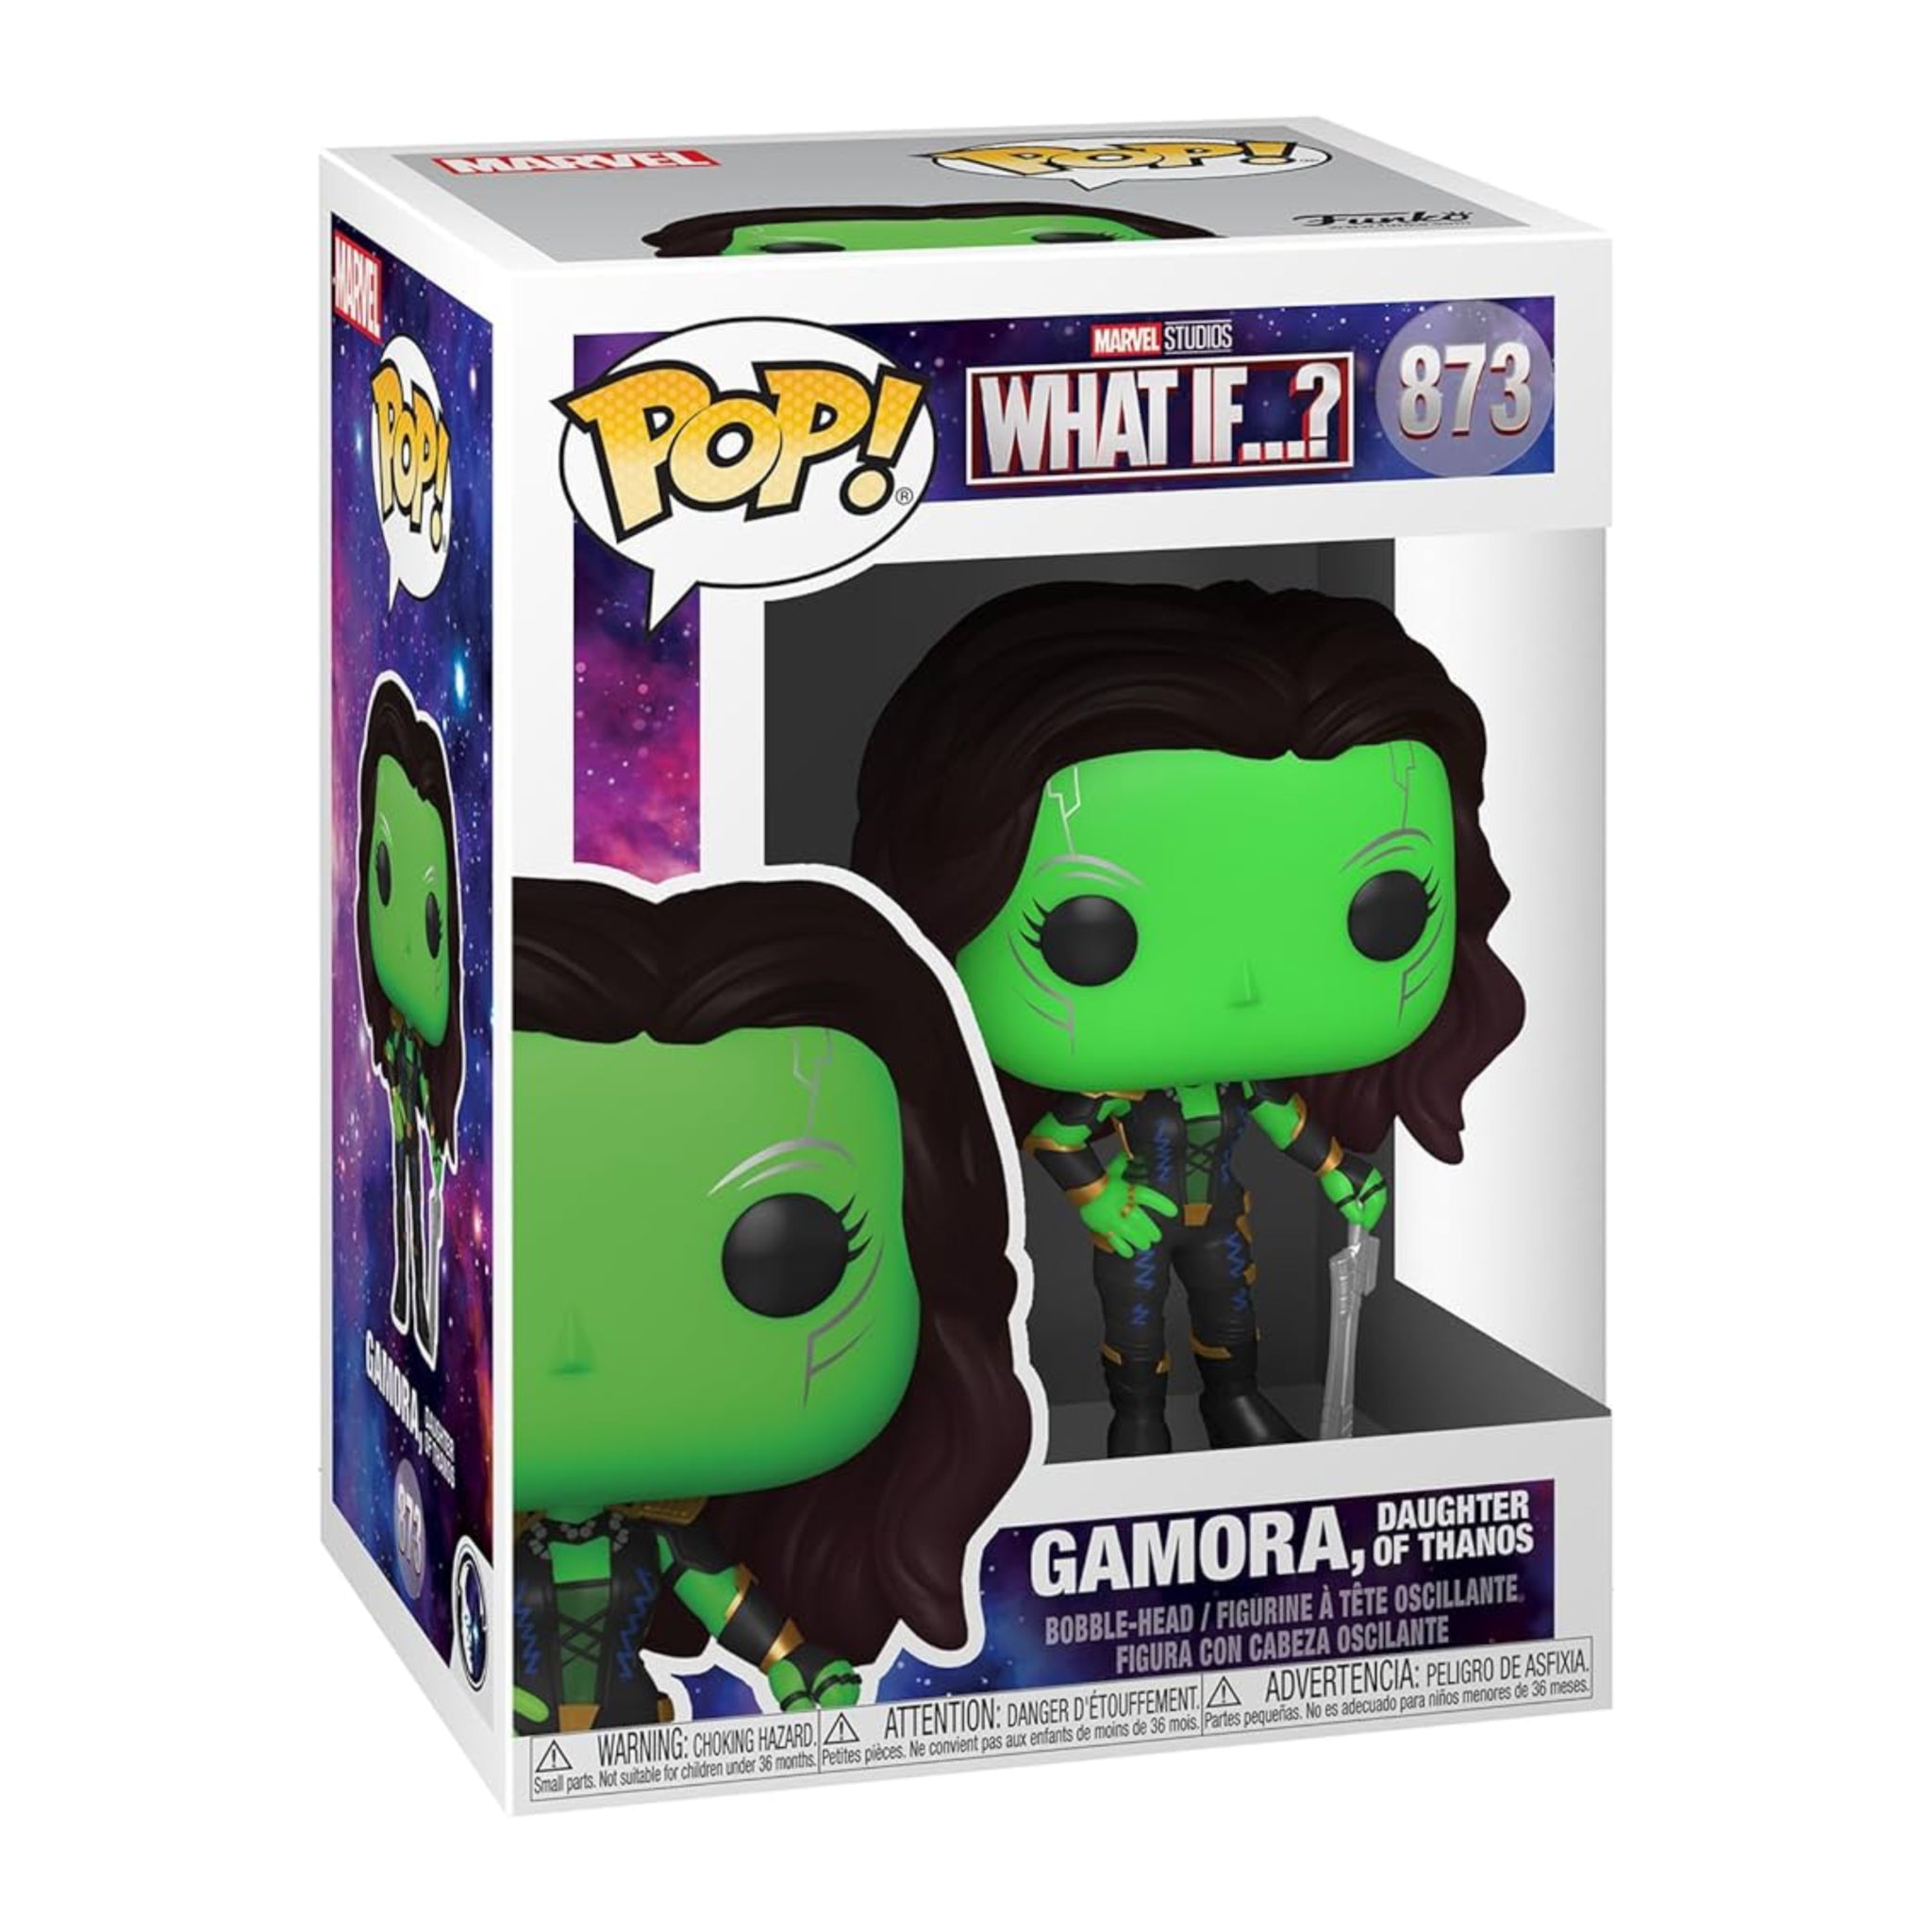 Gamora, Daughter of Thanos Funko Pop!